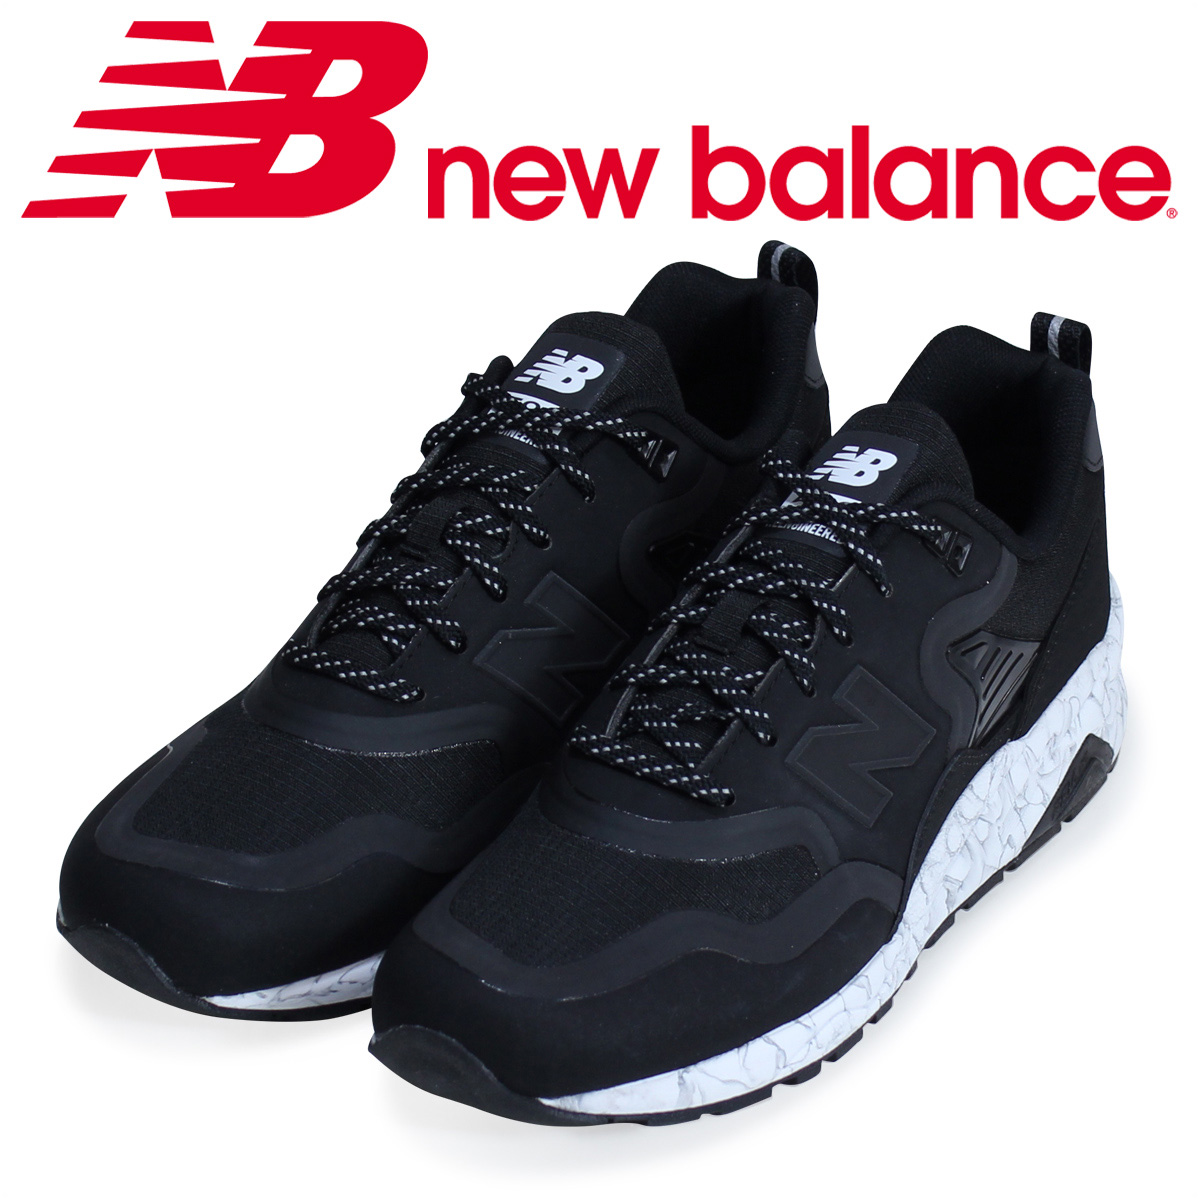 new balance nb 580